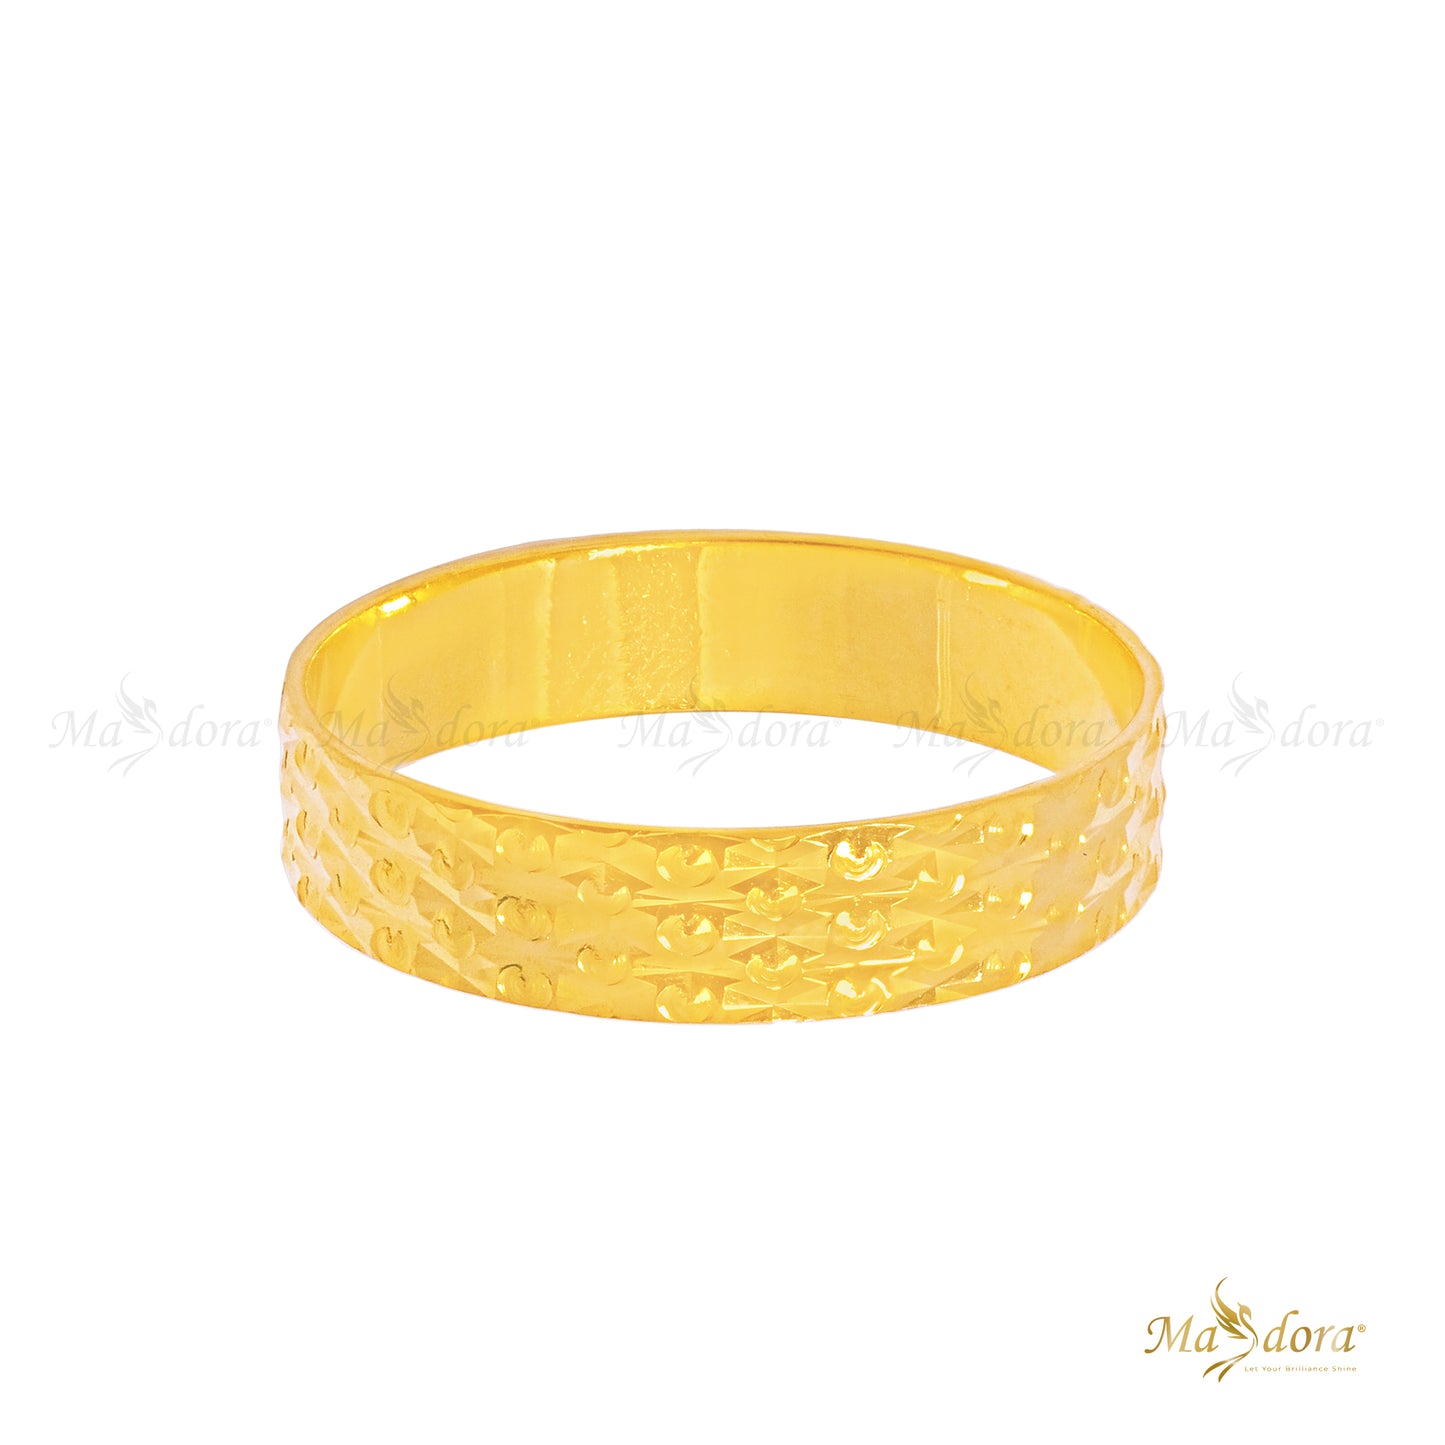 Masdora Cincin Emas Belah Rotan Simple Mona/Simple Mona Ring  (Emas 916)